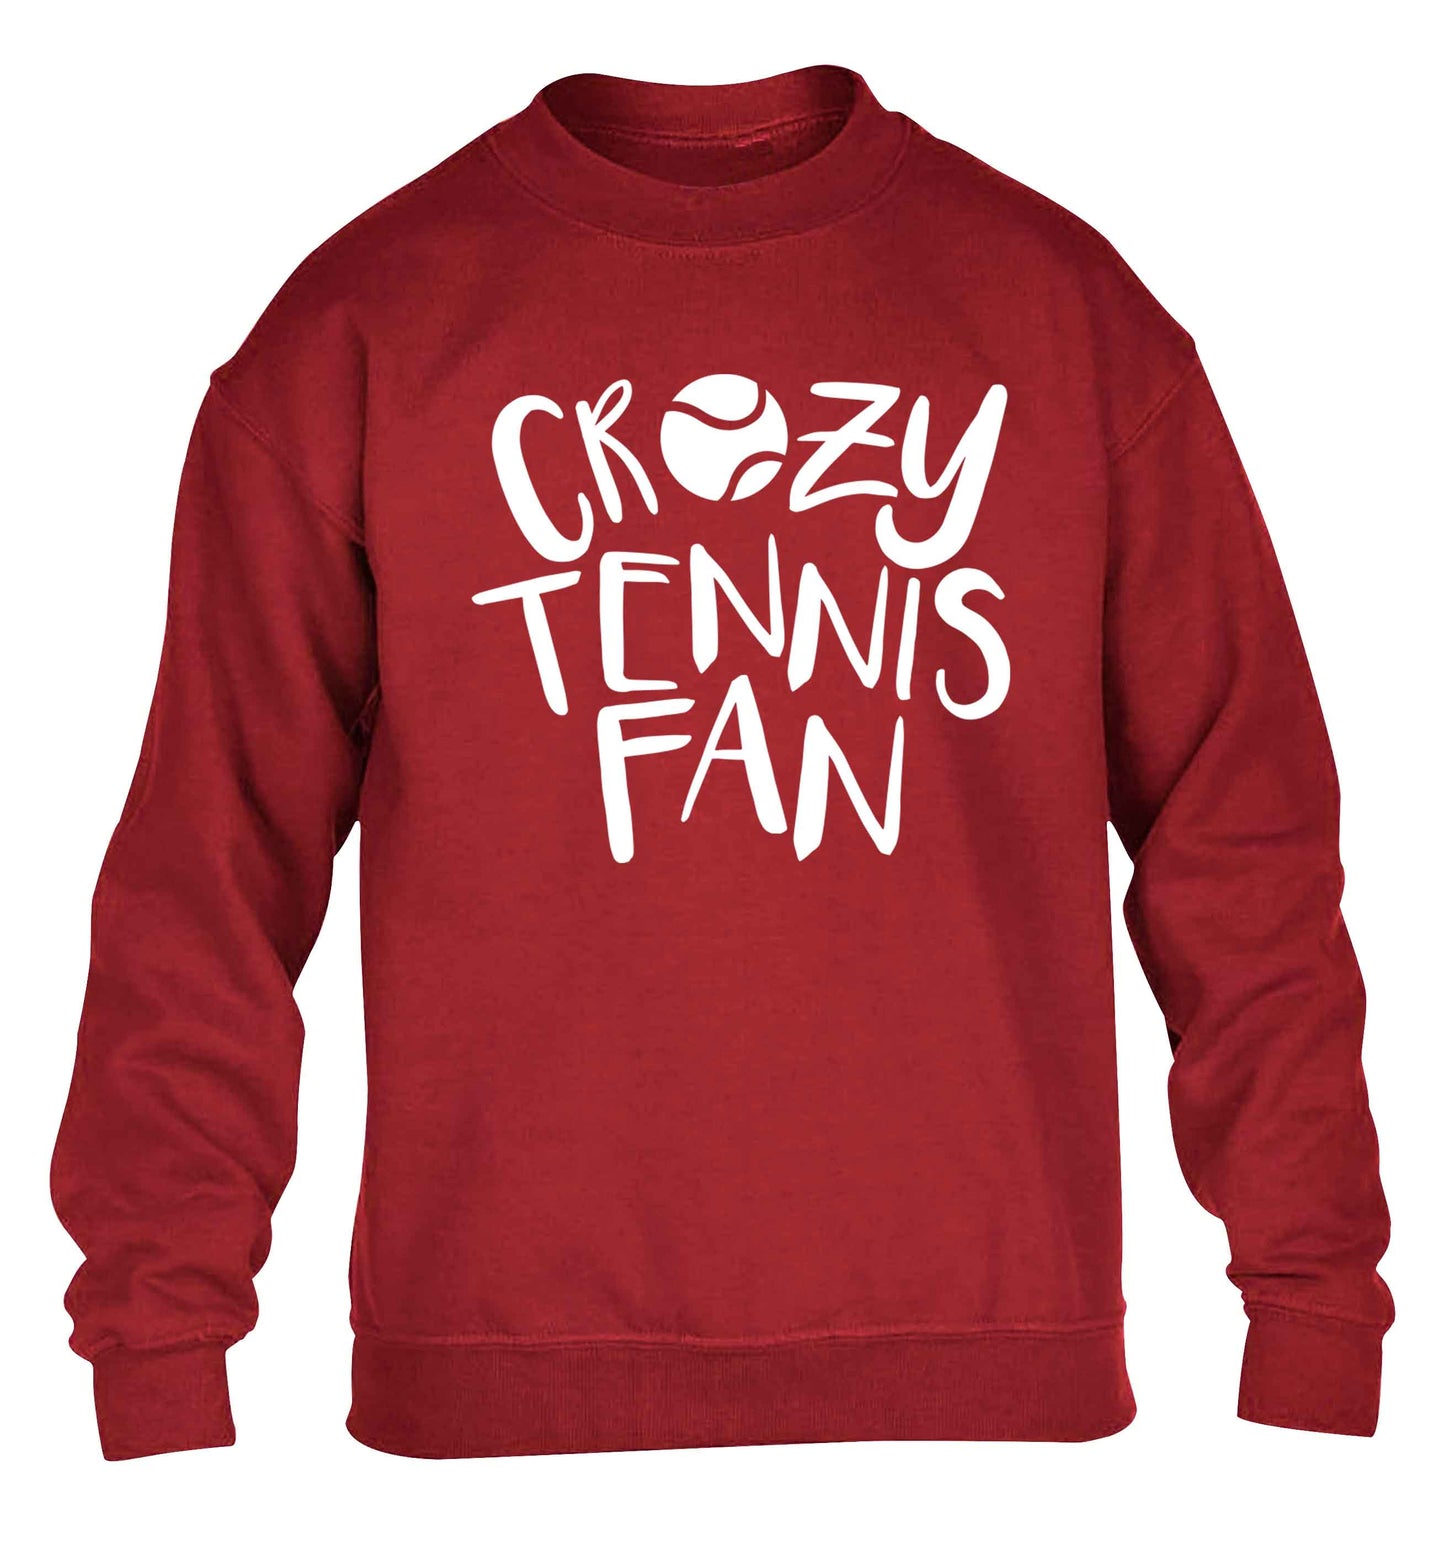 Crazy tennis fan children's grey sweater 12-13 Years